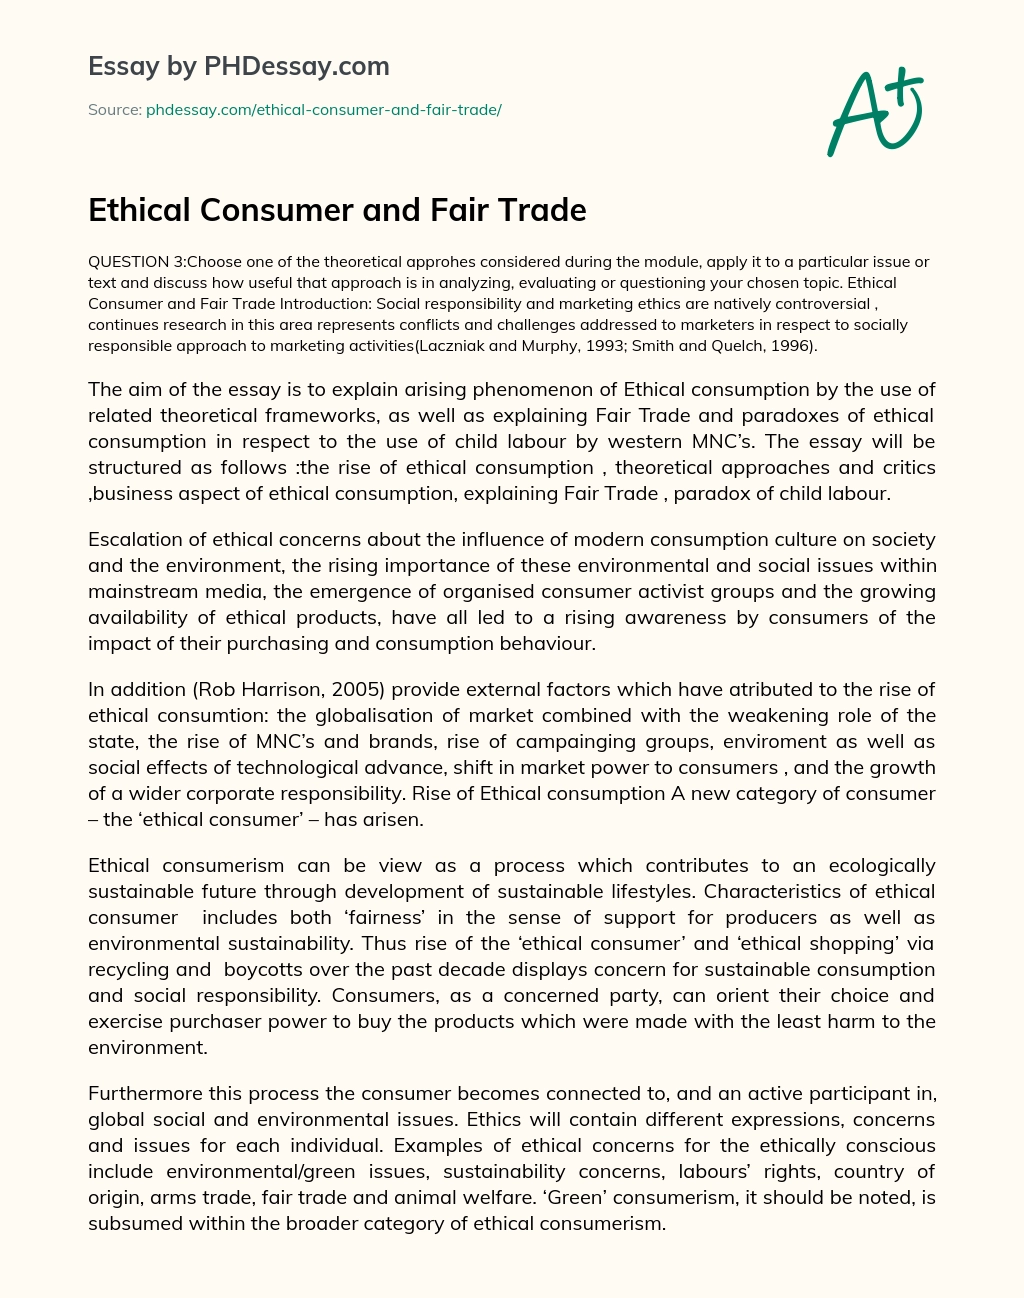 Ethical Consumer and Fair Trade essay